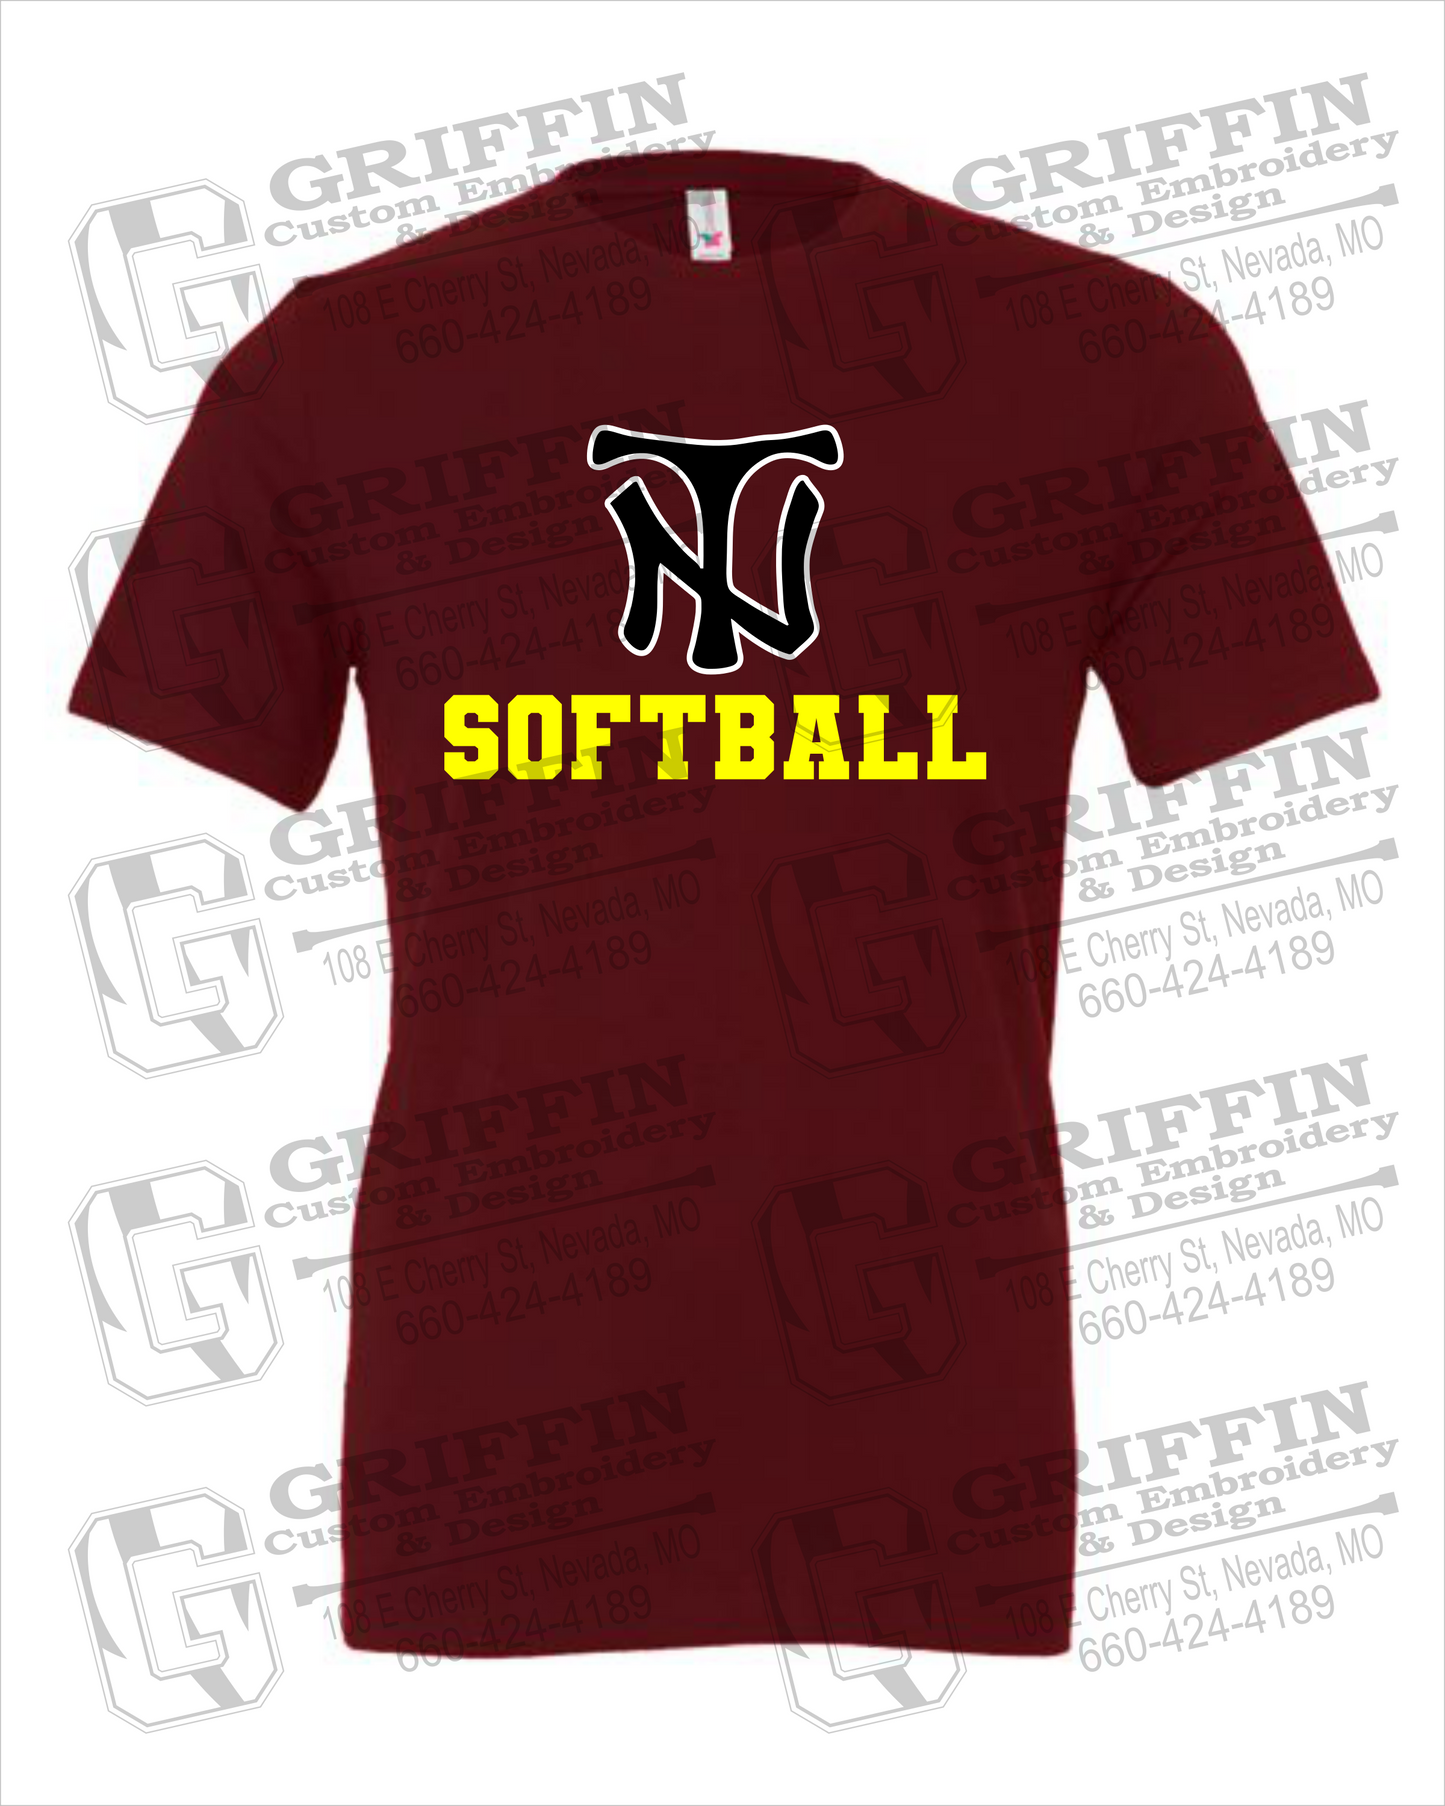 Nevada Tigers 24-C 100% Cotton Short Sleeve T-Shirt - Softball